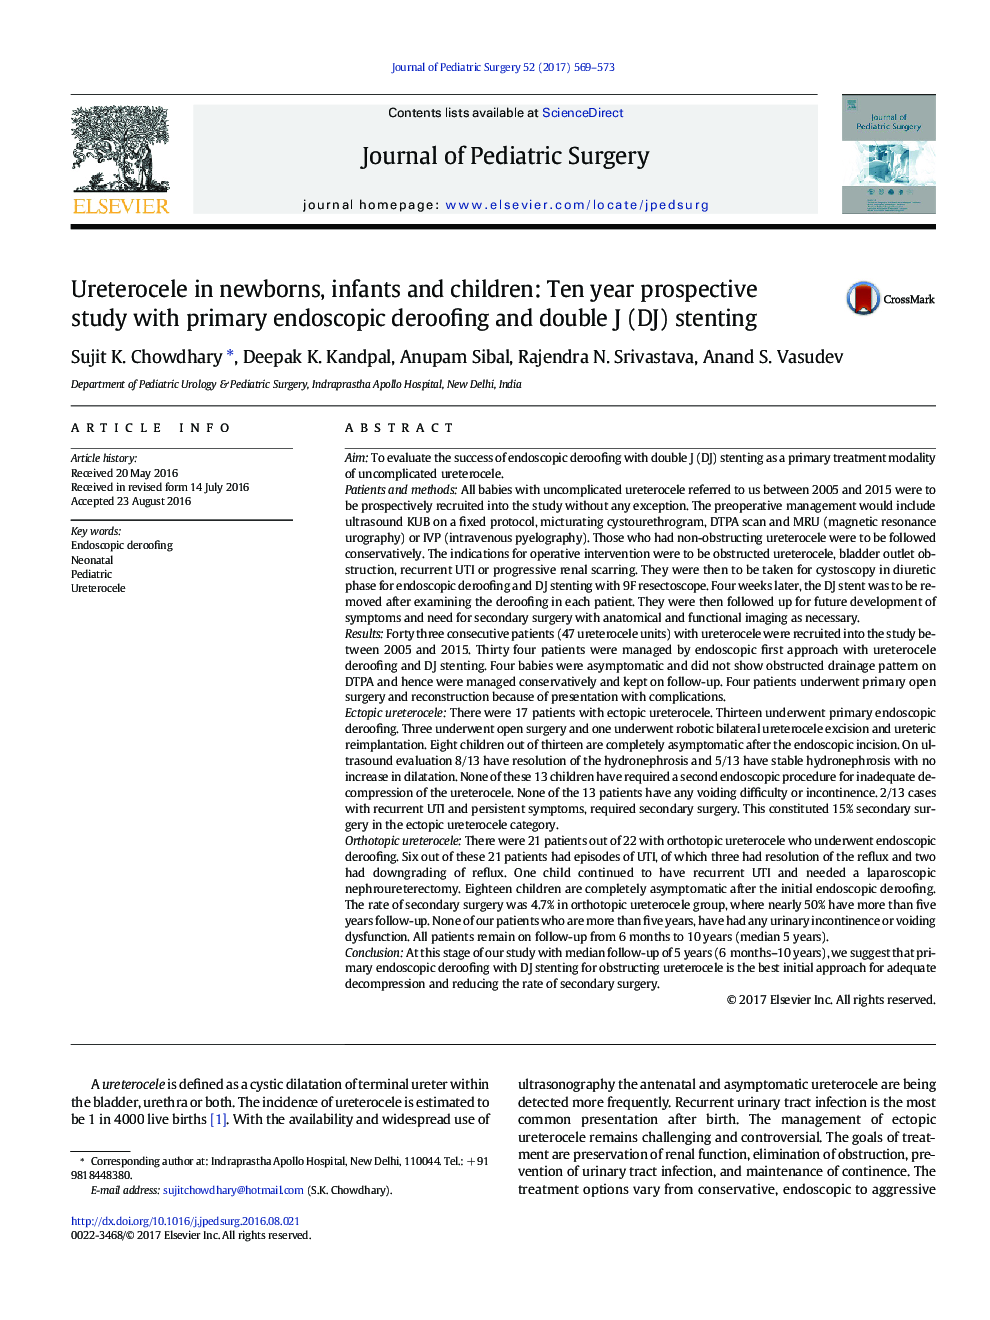 Original ArticleUreterocele in newborns, infants and children: Ten year prospective study with primary endoscopic deroofing and double J (DJ) stenting